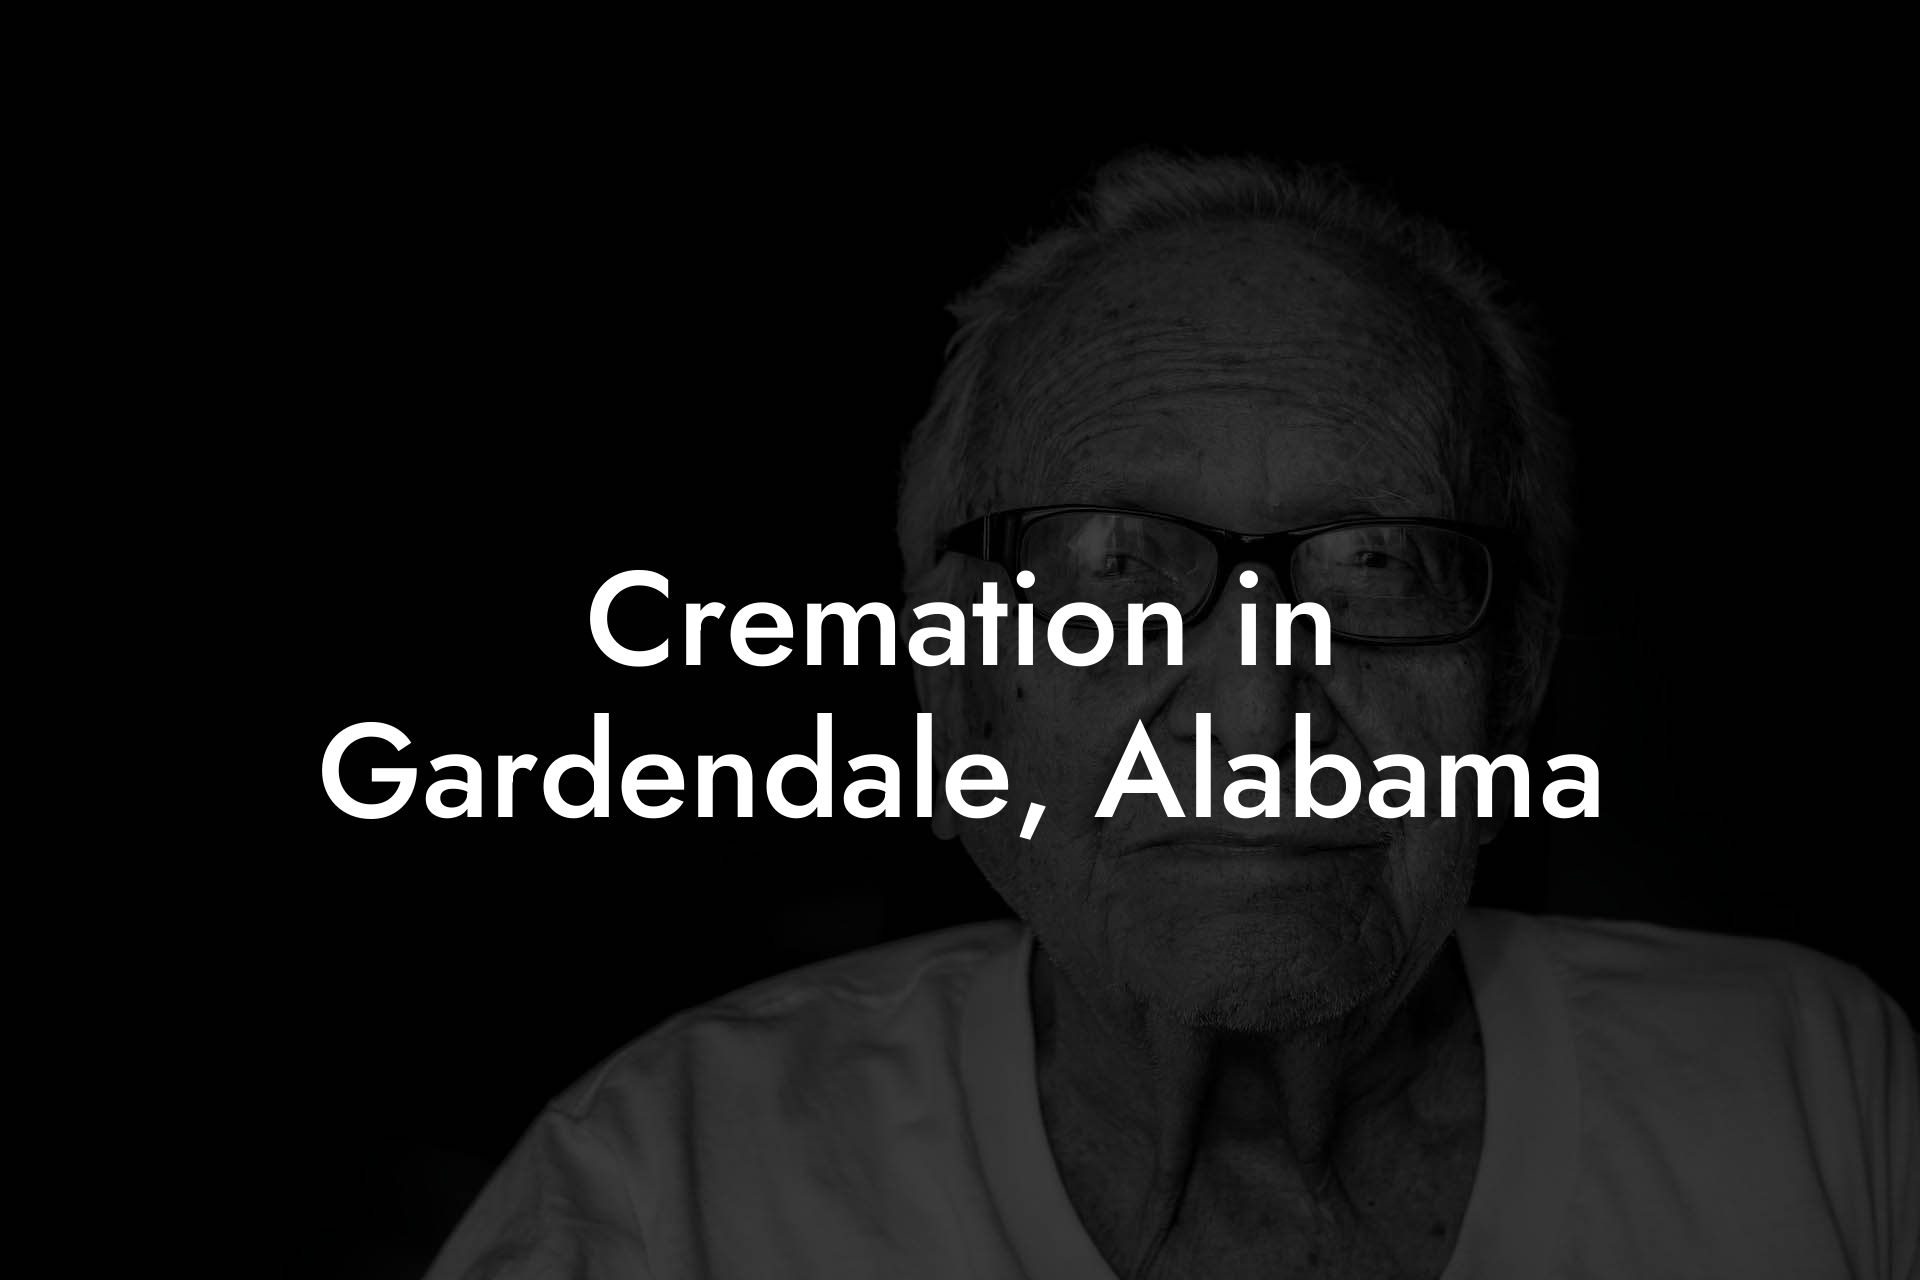 Cremation in Gardendale, Alabama